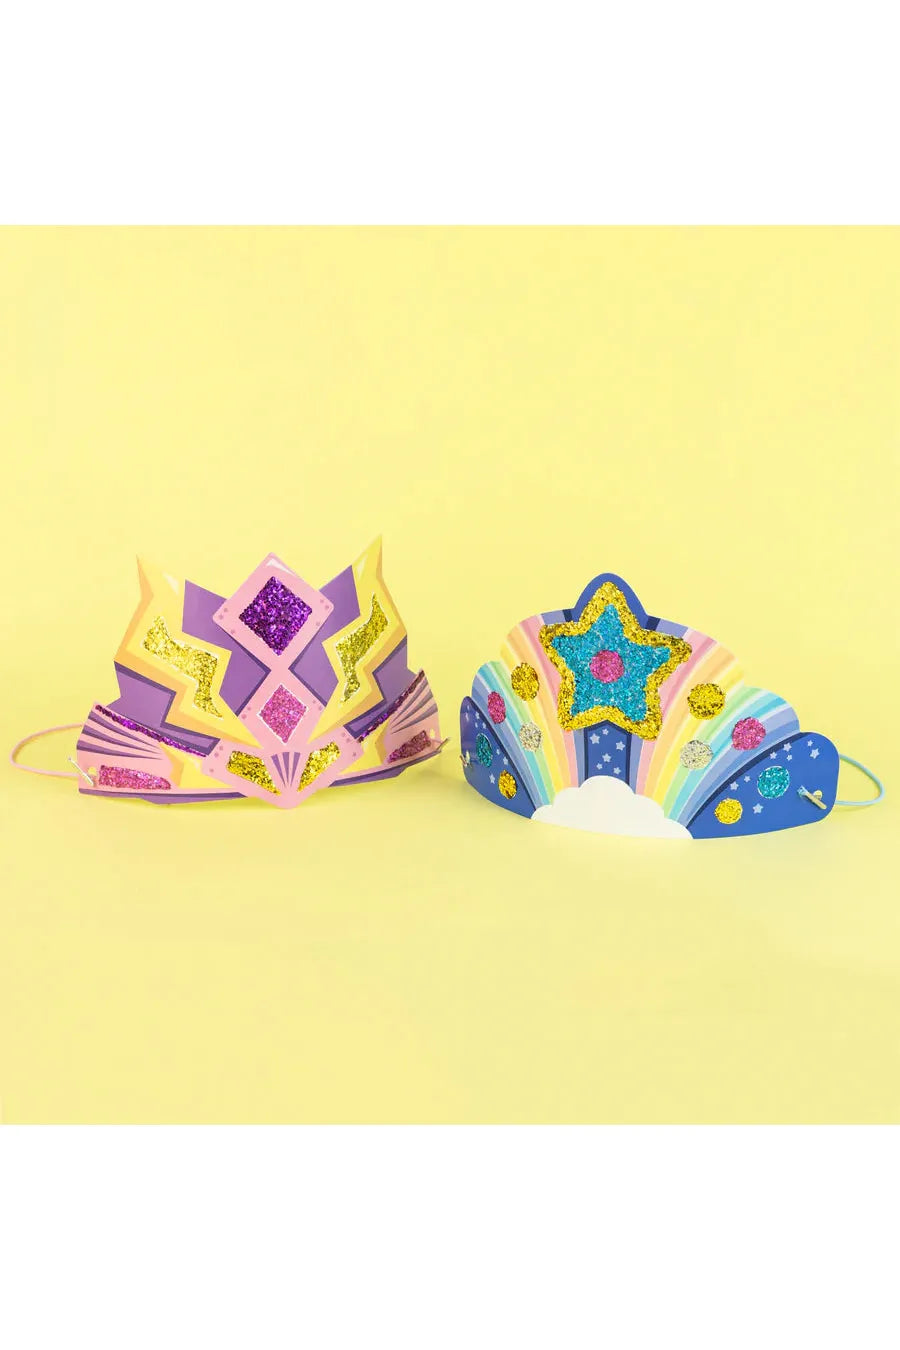 Glitter Goo Crowns - Super Rainbow